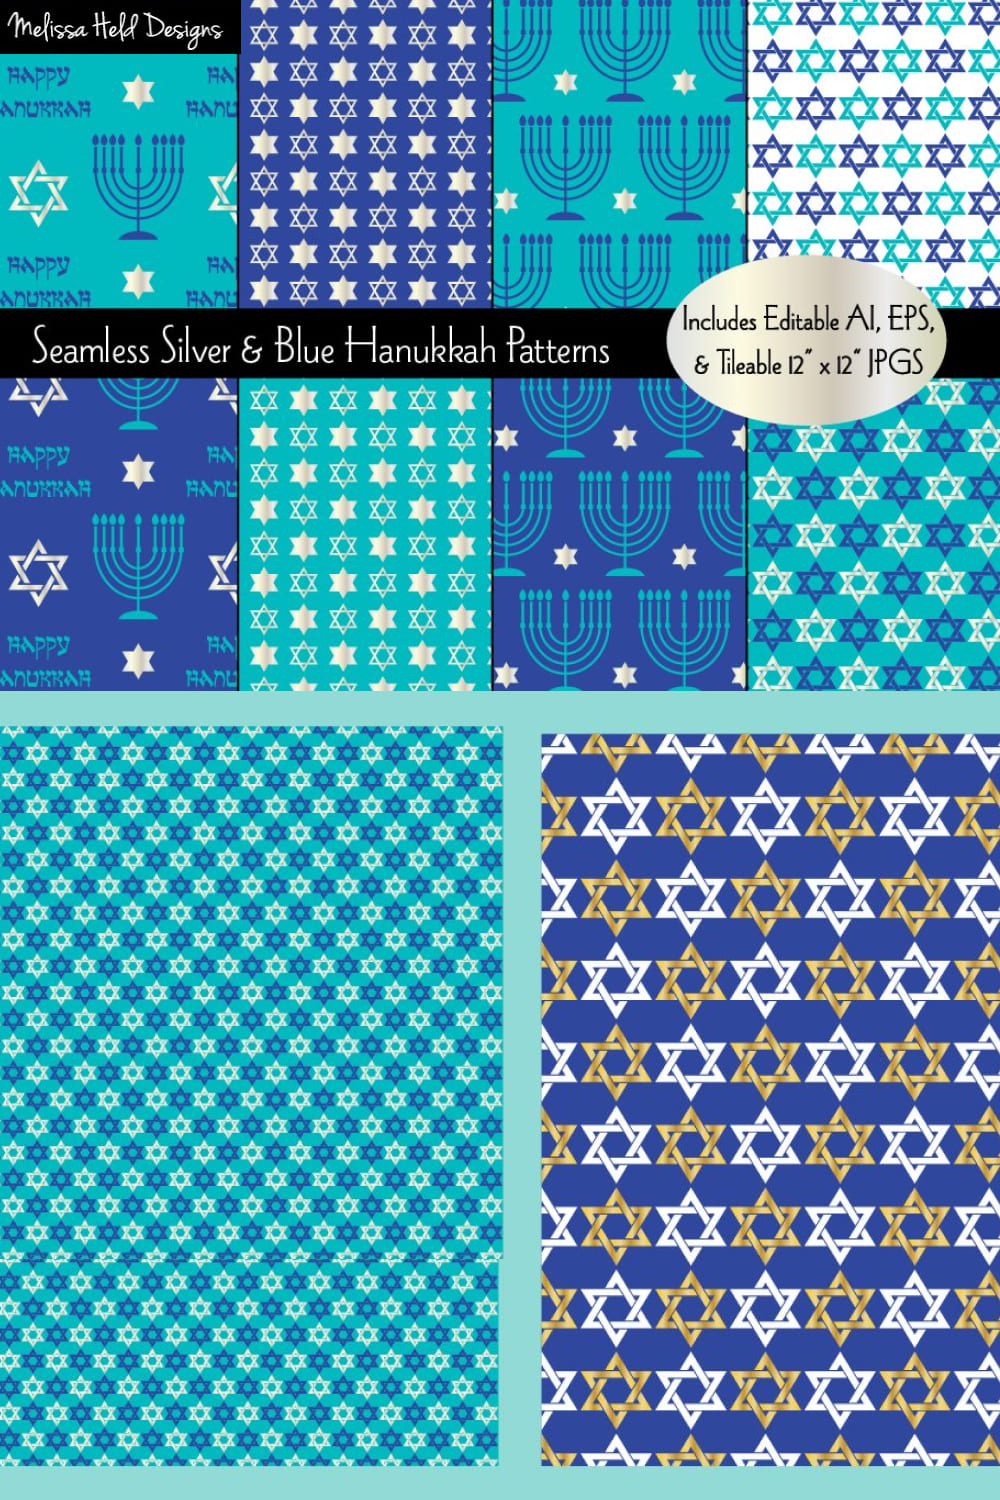 Seamless silver blue hanukkah patterns of pinterest.